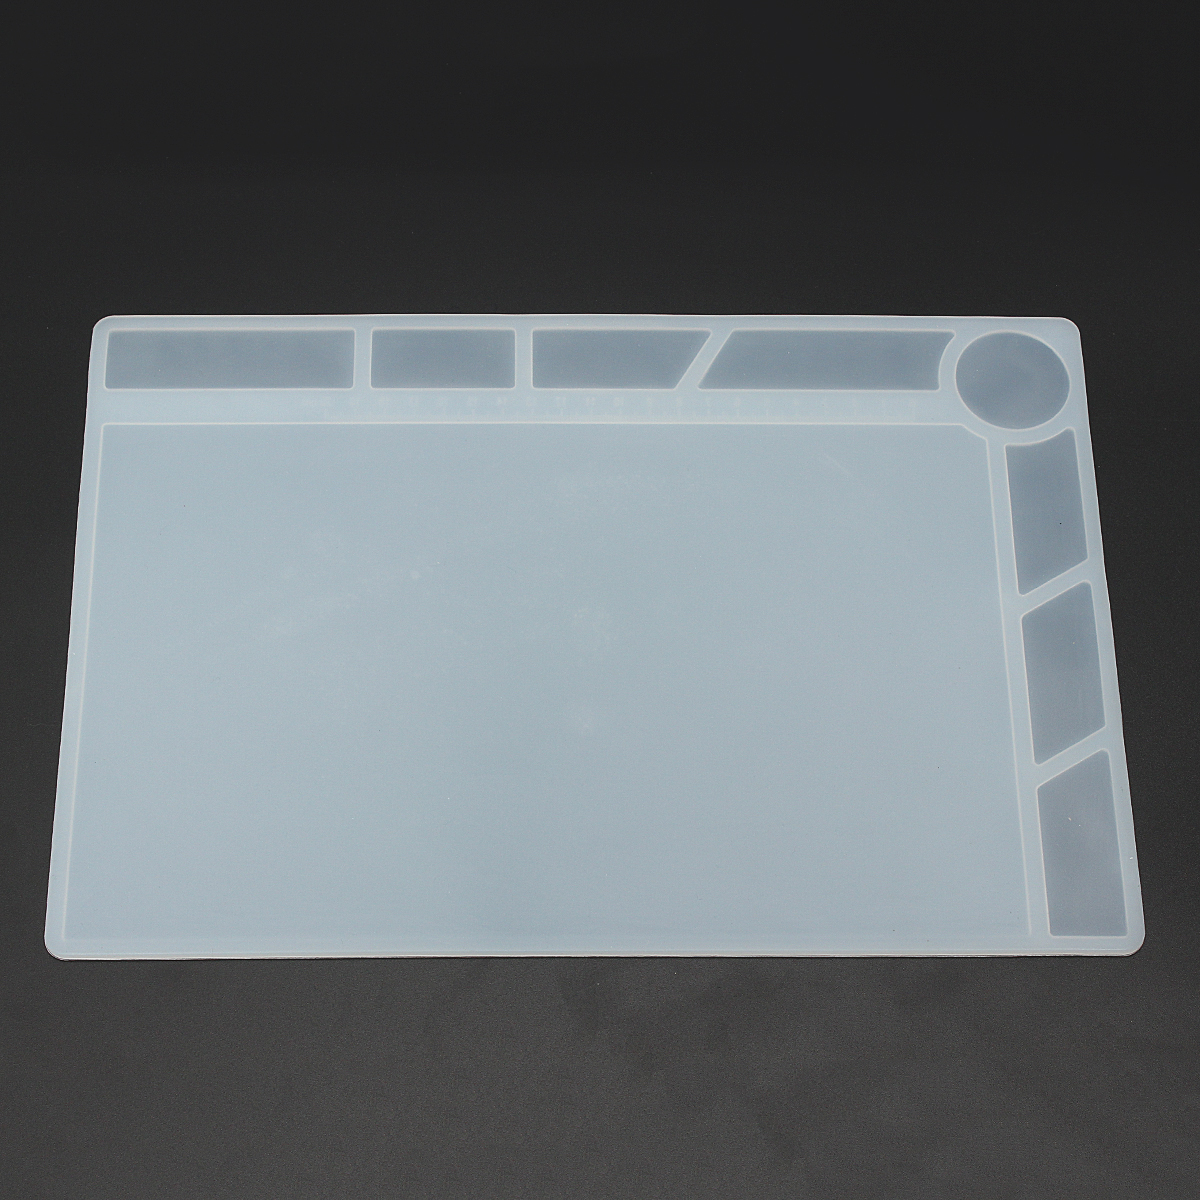 

Transparent 34x23cm Heat-resistant Silicone Pad Desk Mat Maintenance Platform Heat Insulation BGA Soldering Repair Station with 20 cm Scale Ruler